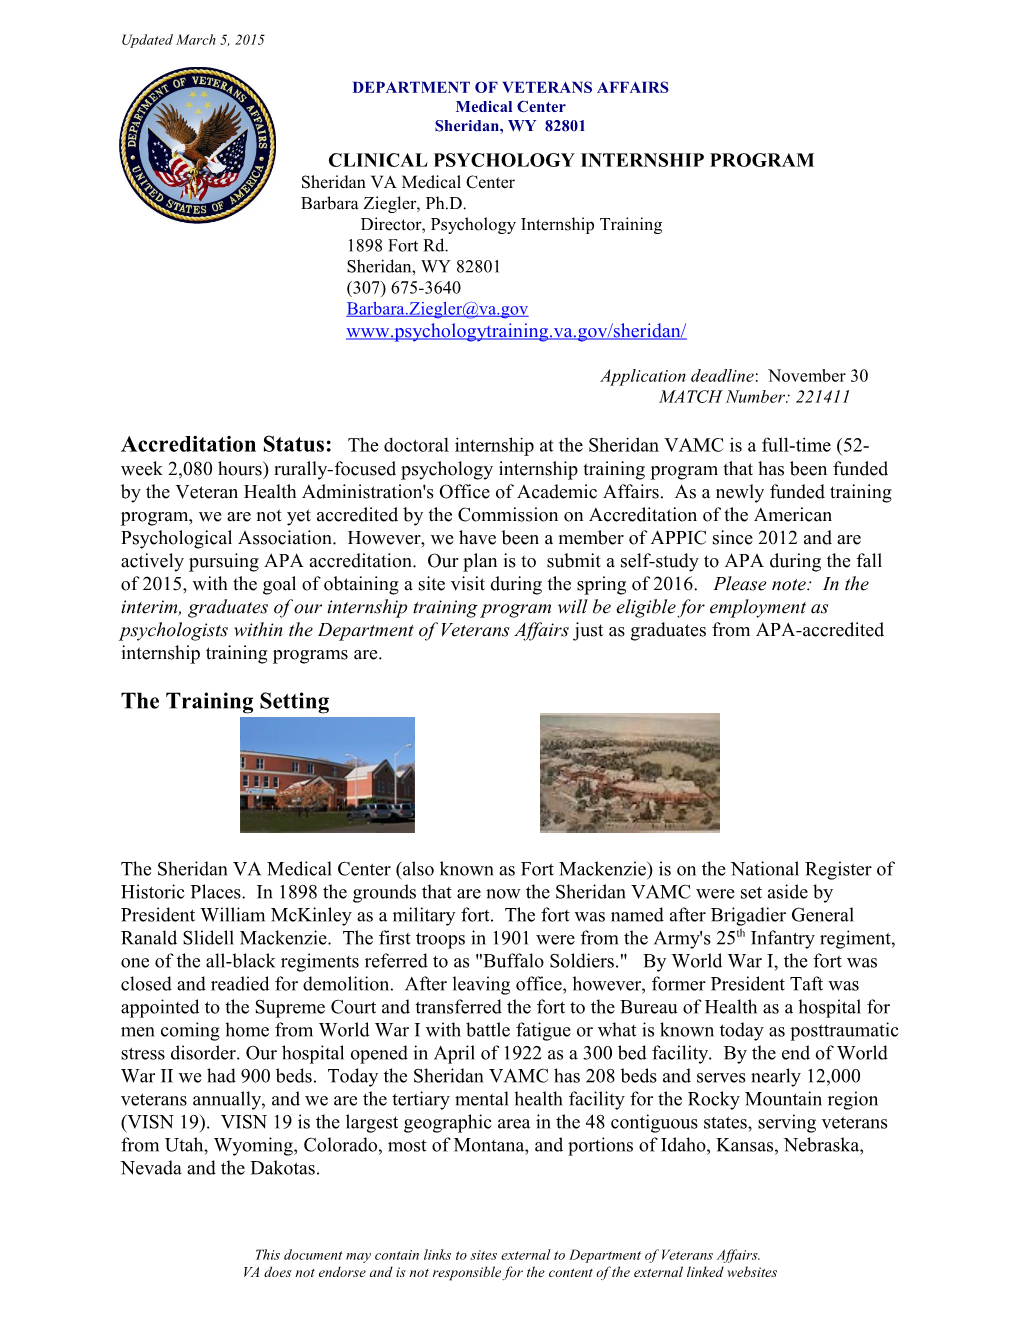 Psychology Internship Training Program in Sheridan Wyoming - U.S. Department of Veterans Affairs